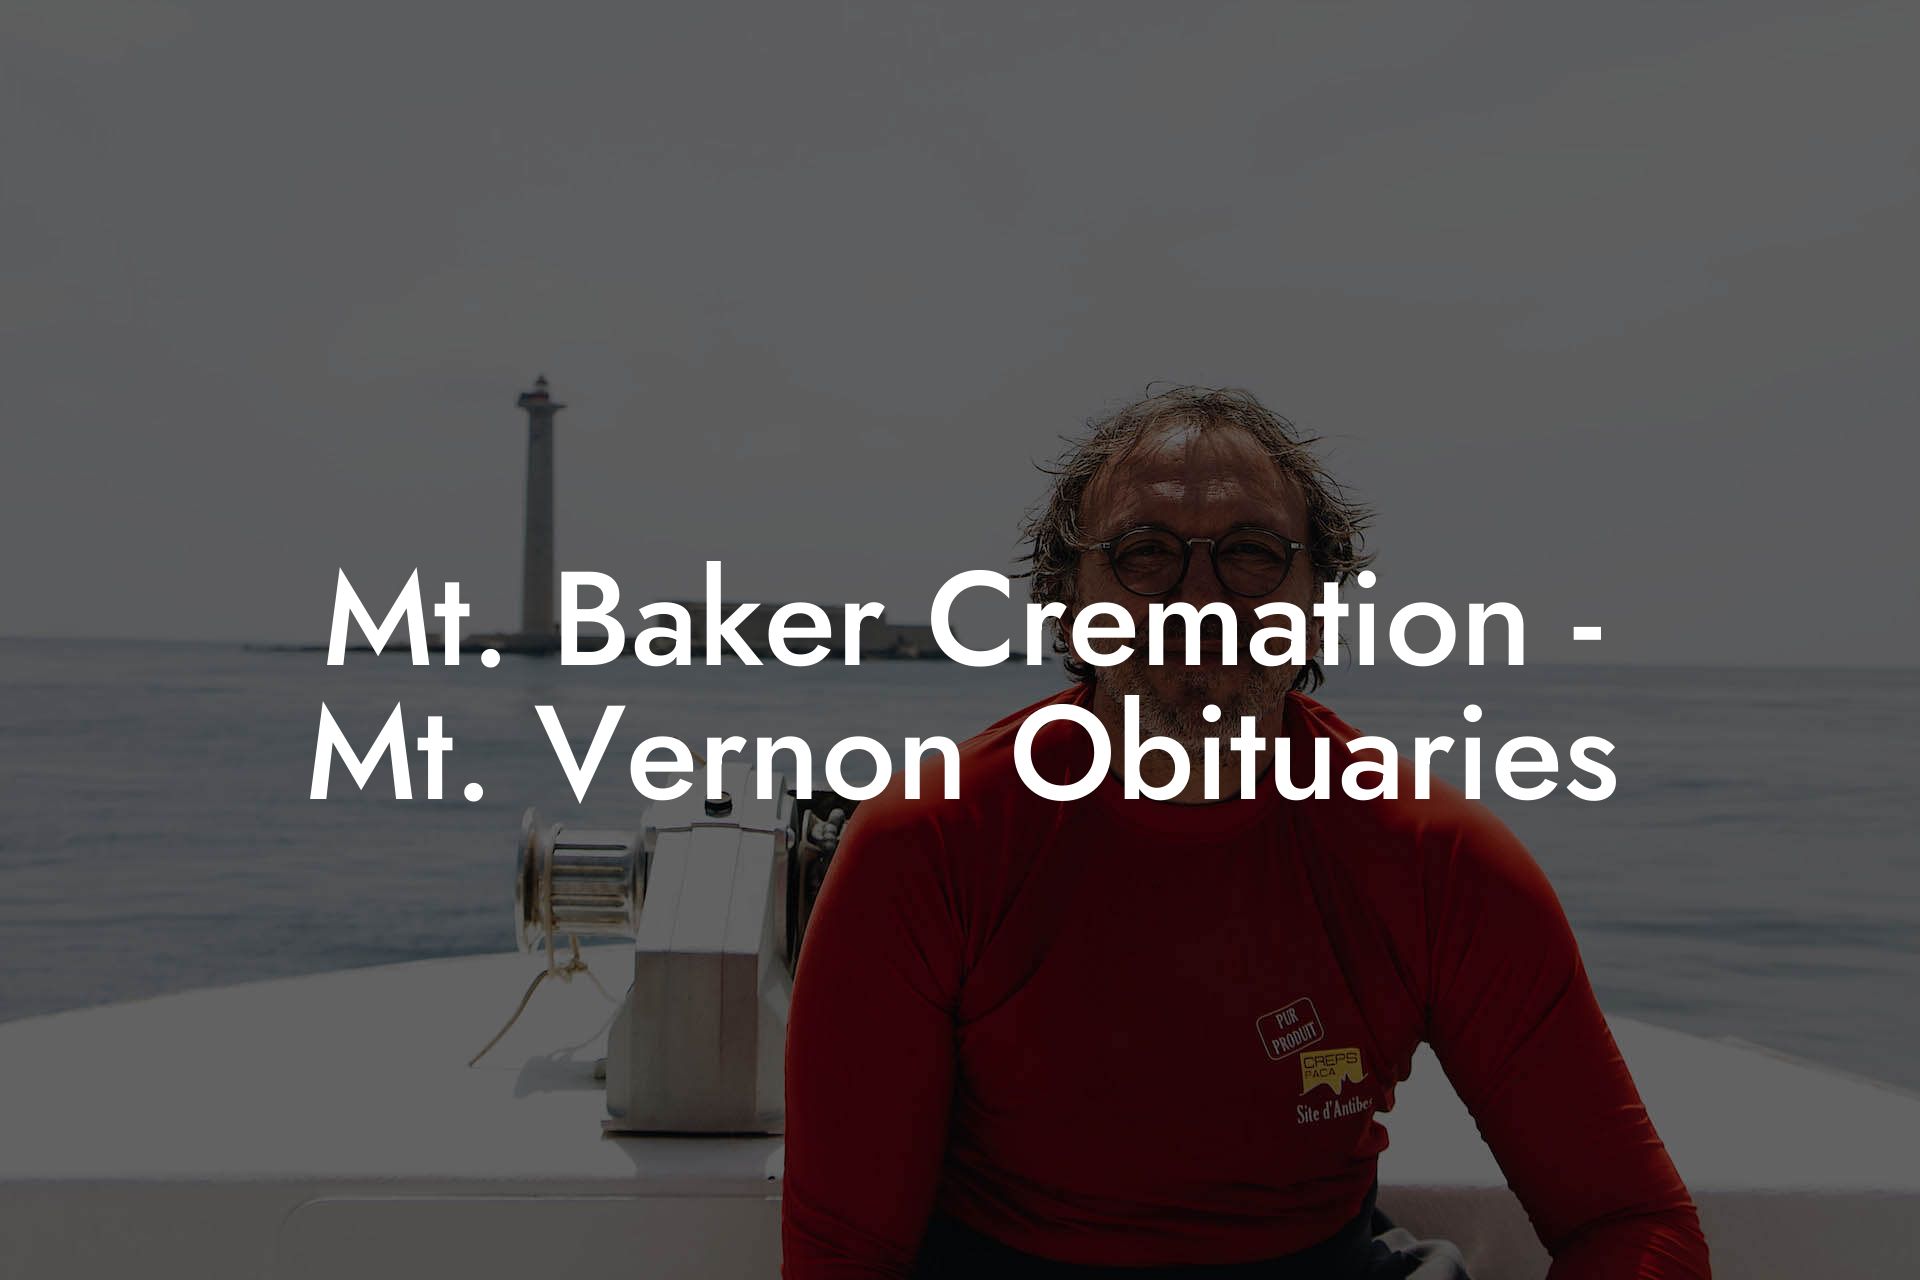 Mt. Baker Cremation - Mt. Vernon Obituaries